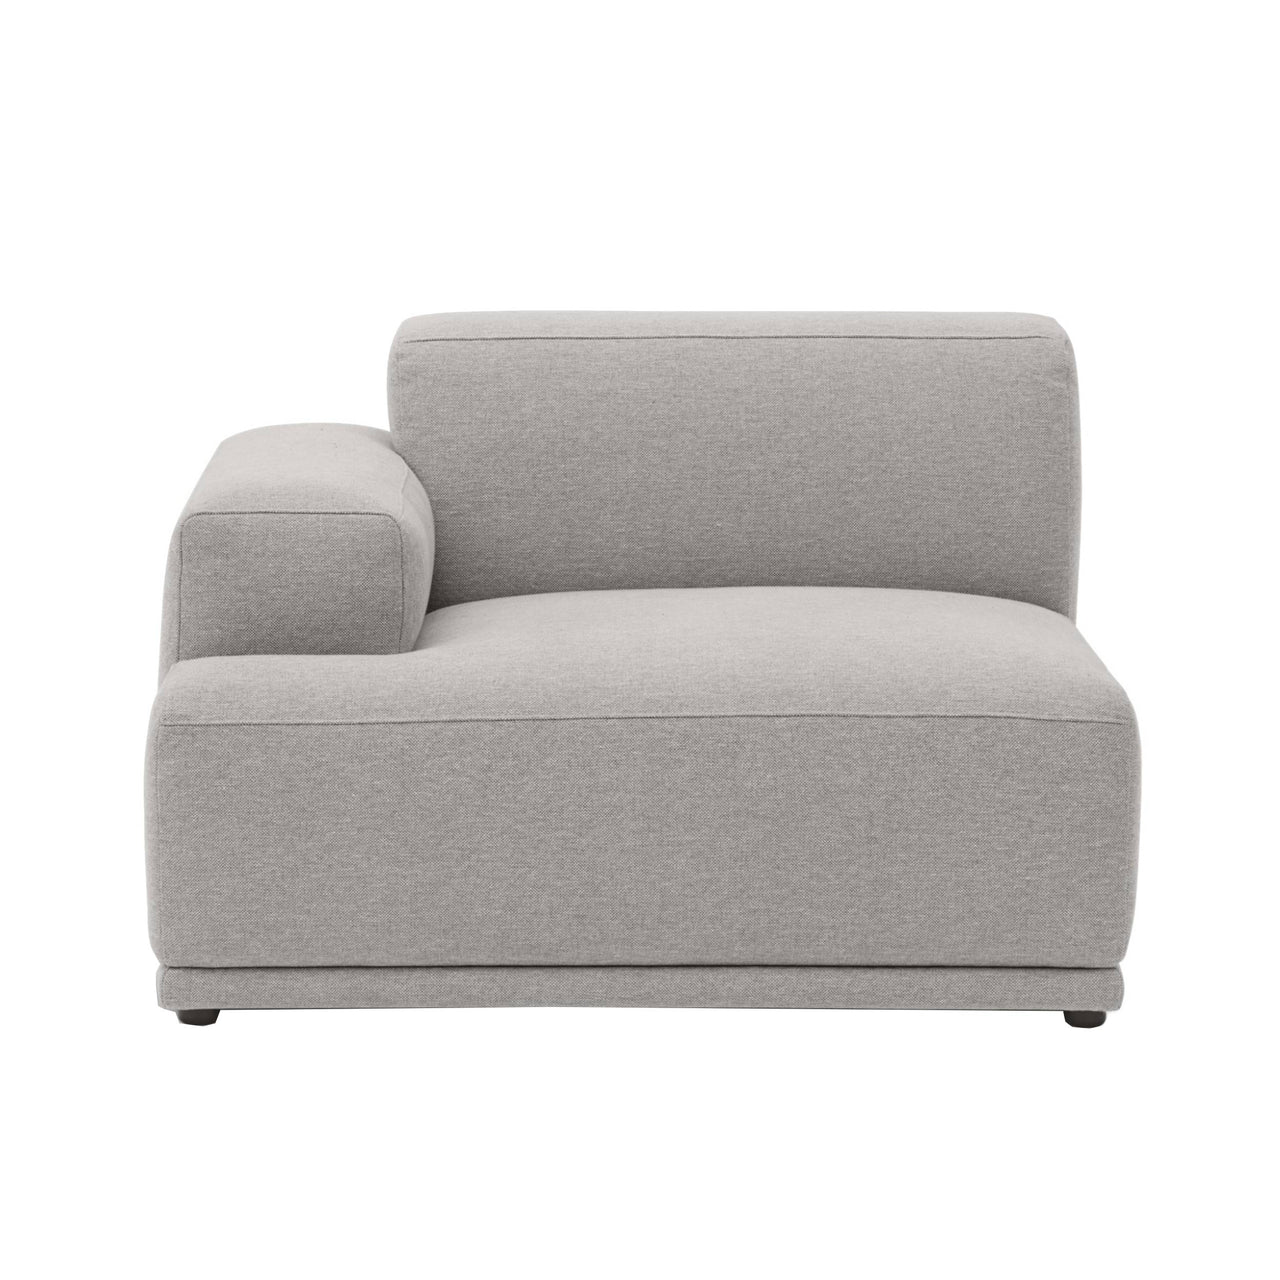 Connect Modular Sofa Pieces: A - Left Armrest